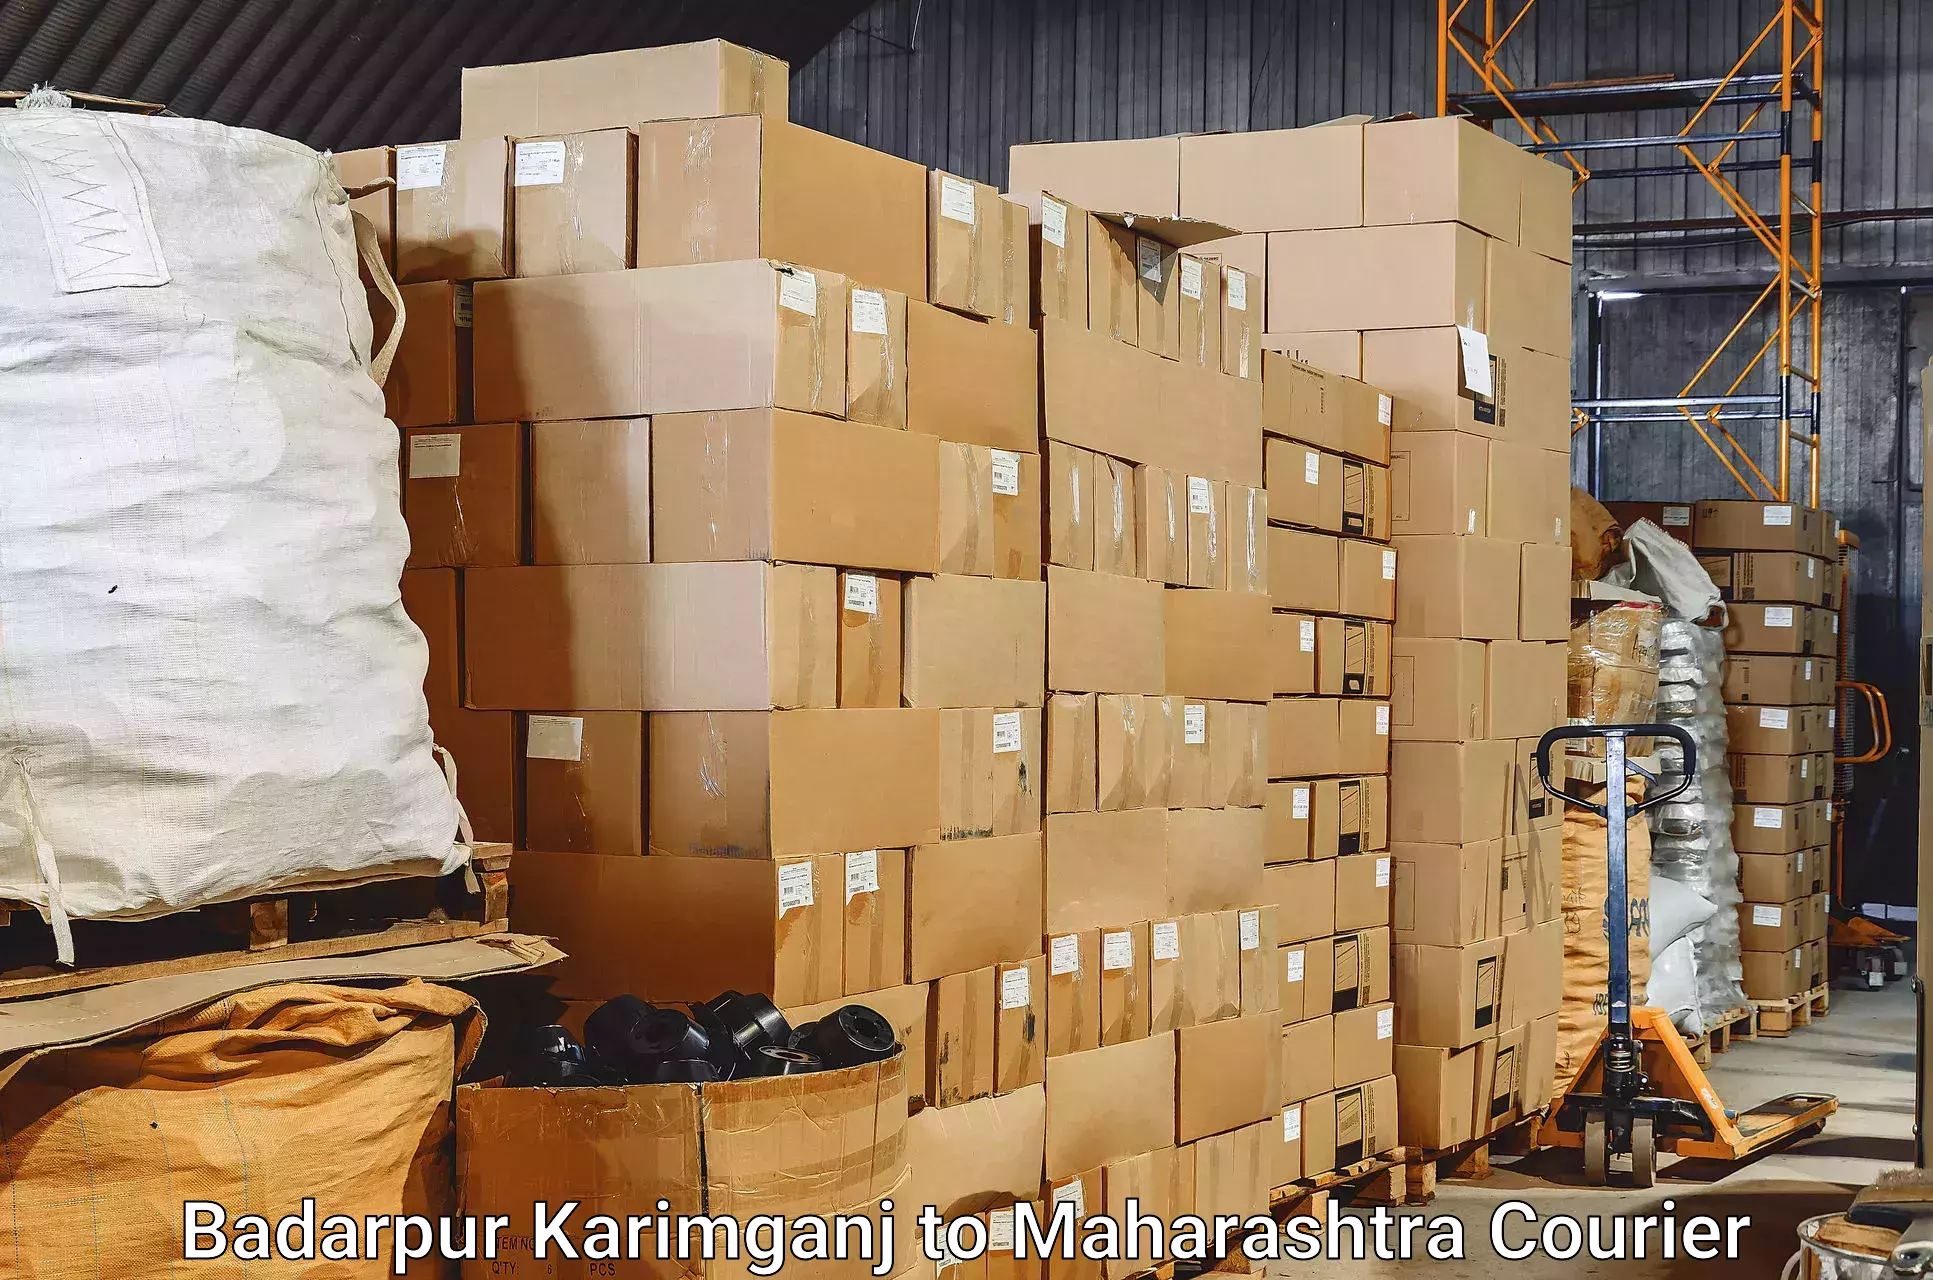 Luggage transport consultancy Badarpur Karimganj to Raigarh Maharashtra